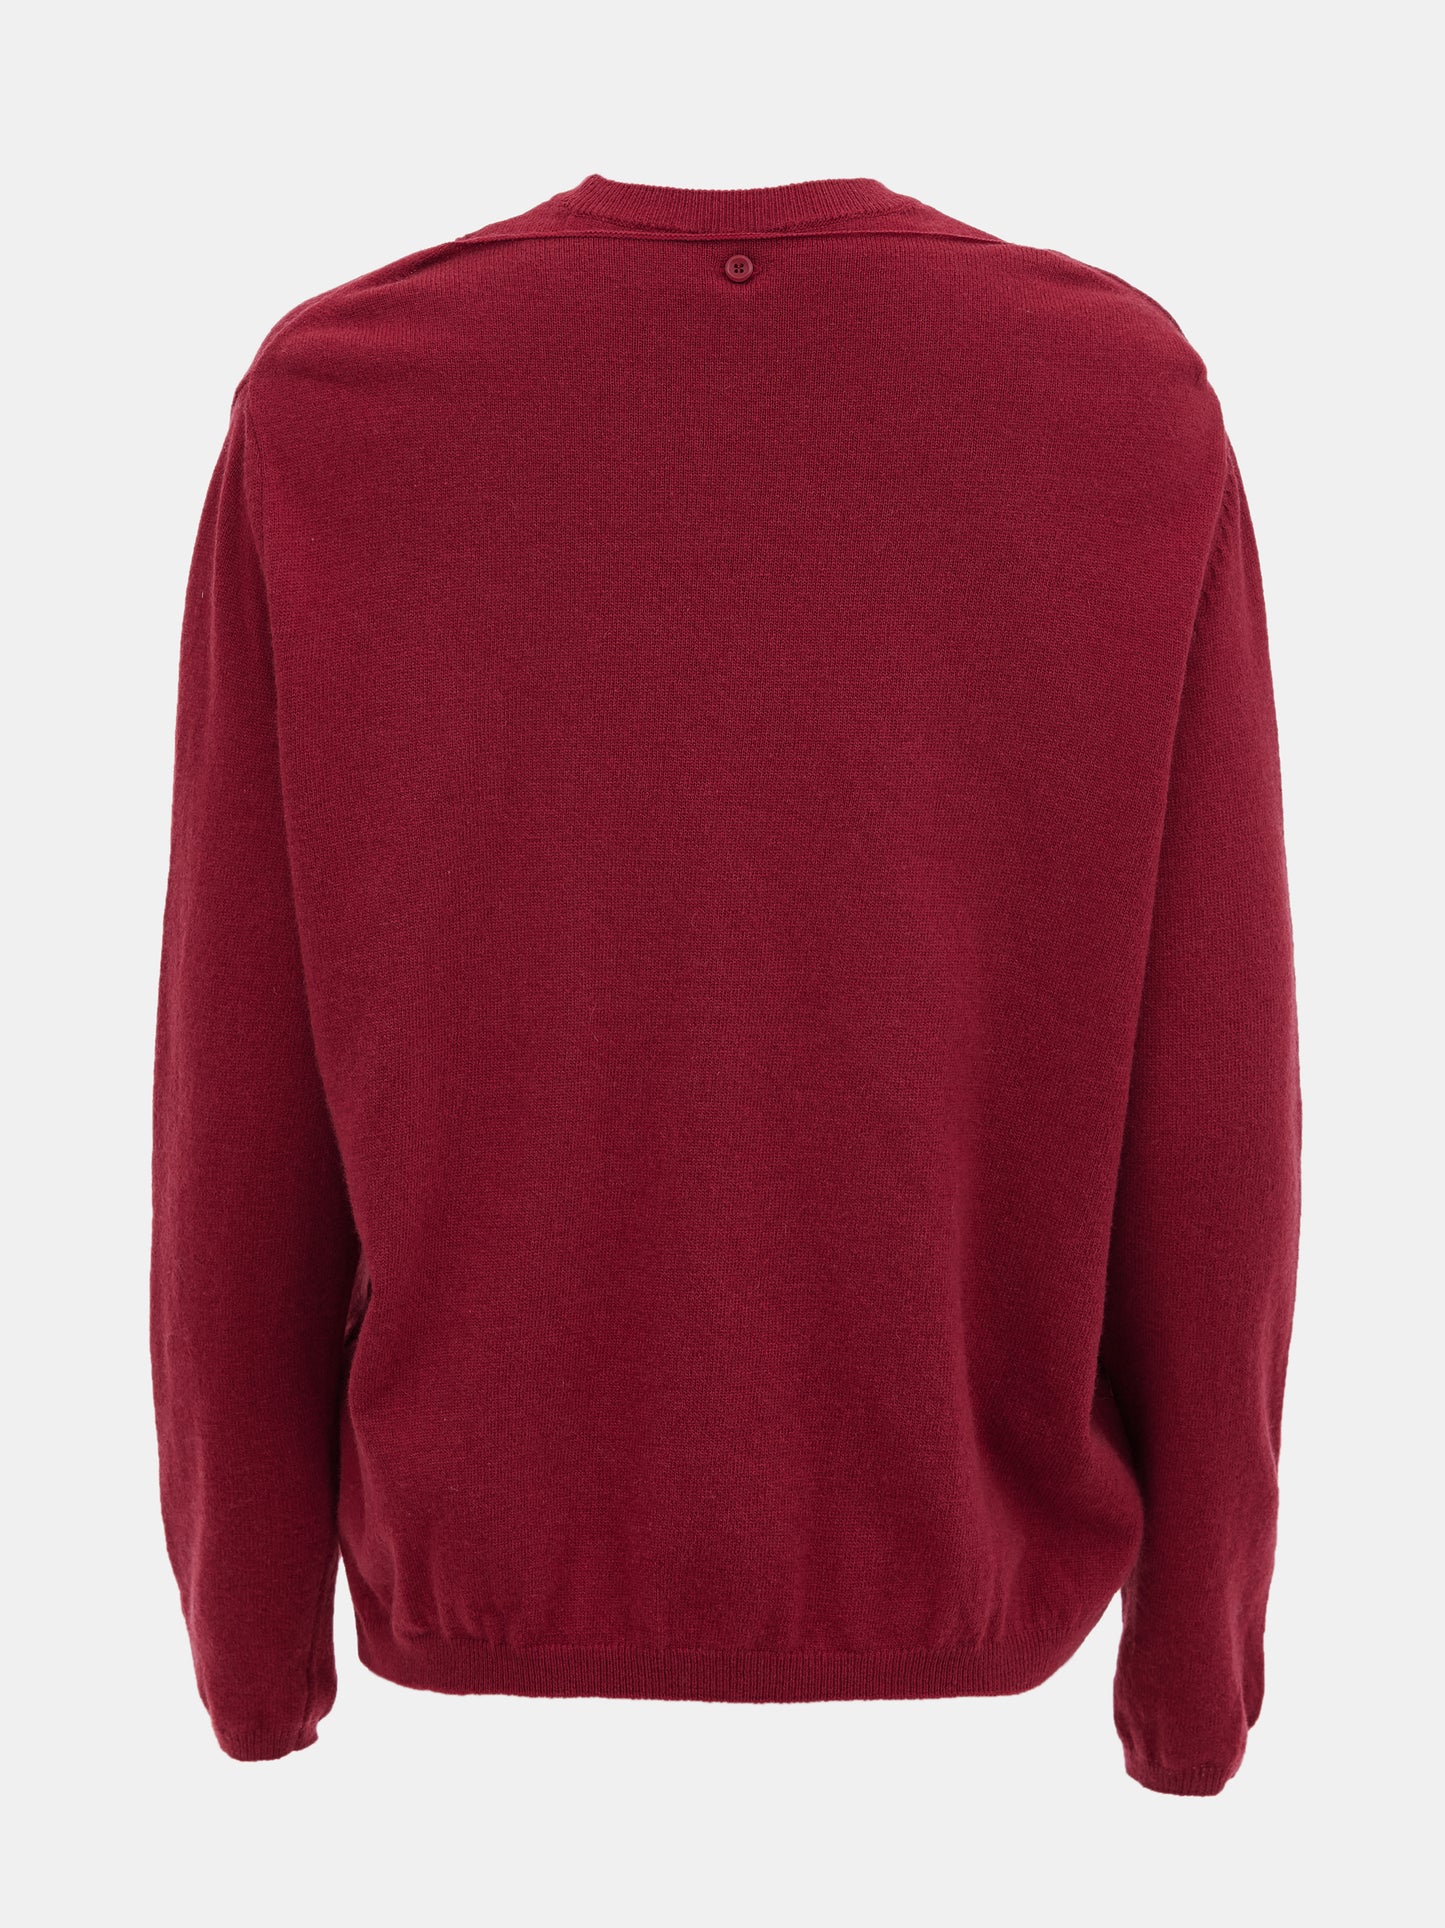 Two-Piece Merino Wool Sweater, Red